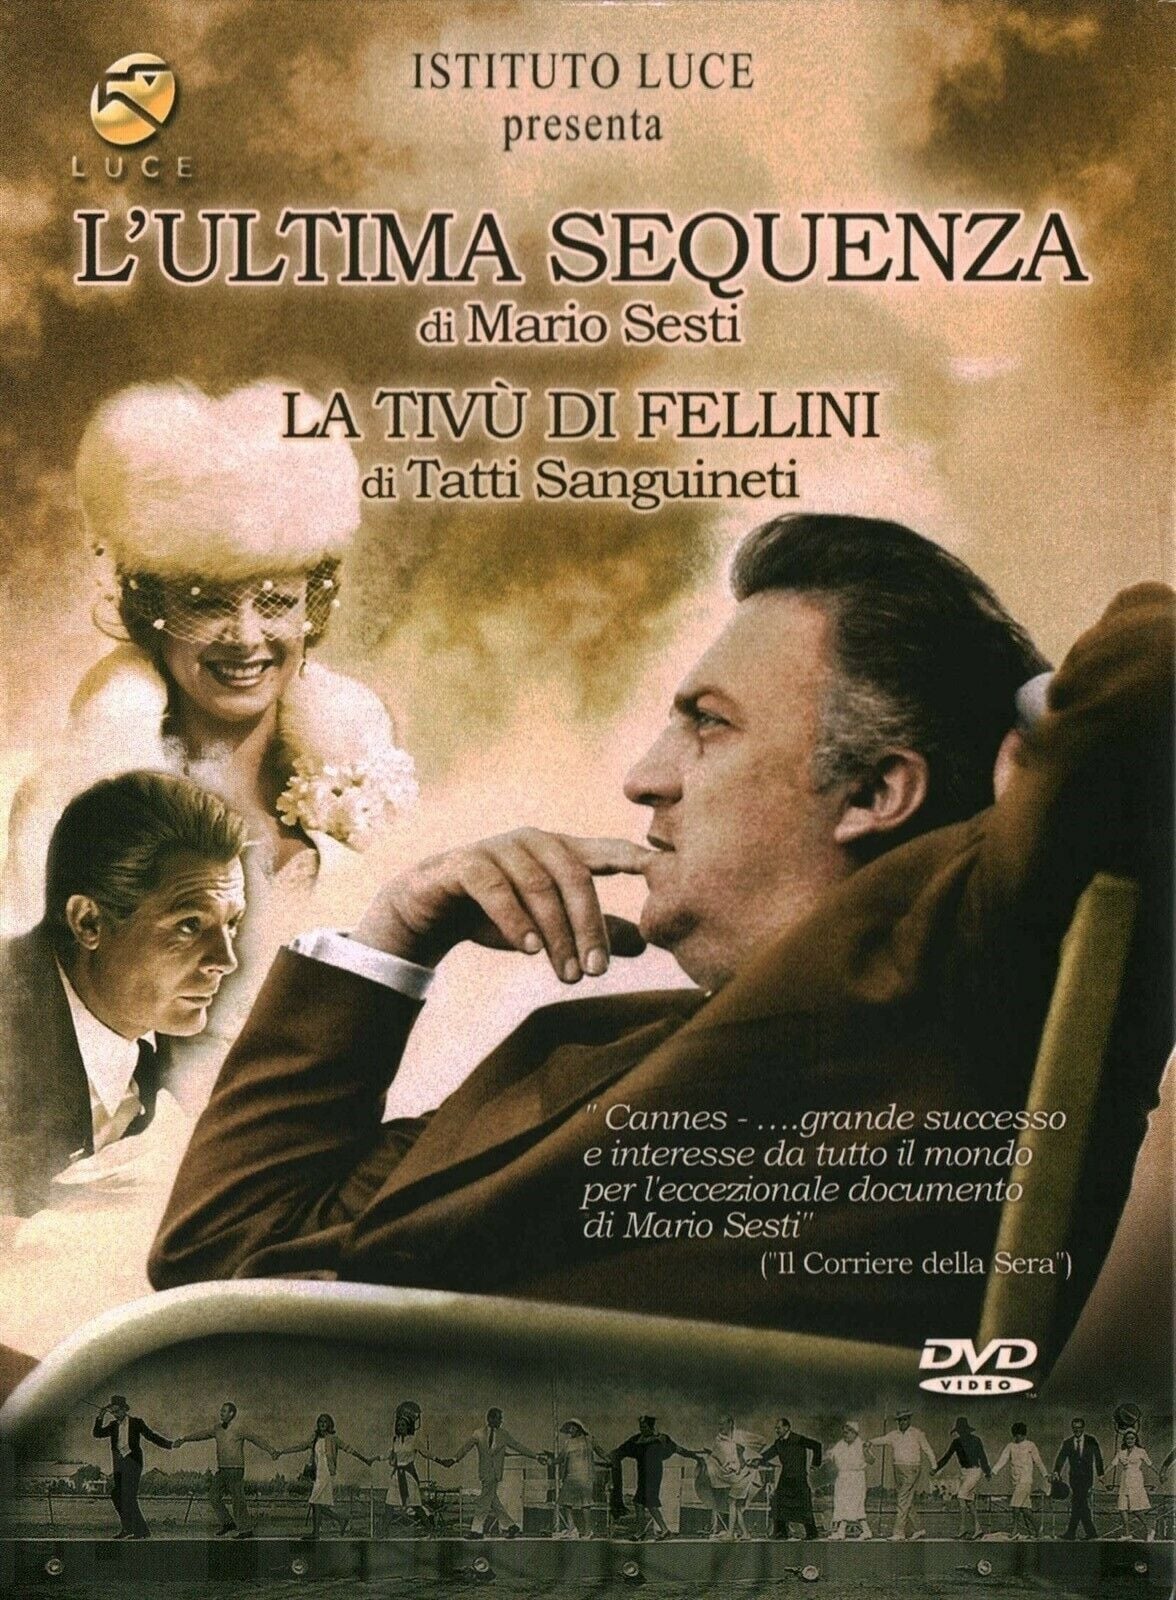 Fellini's TV Advertisements